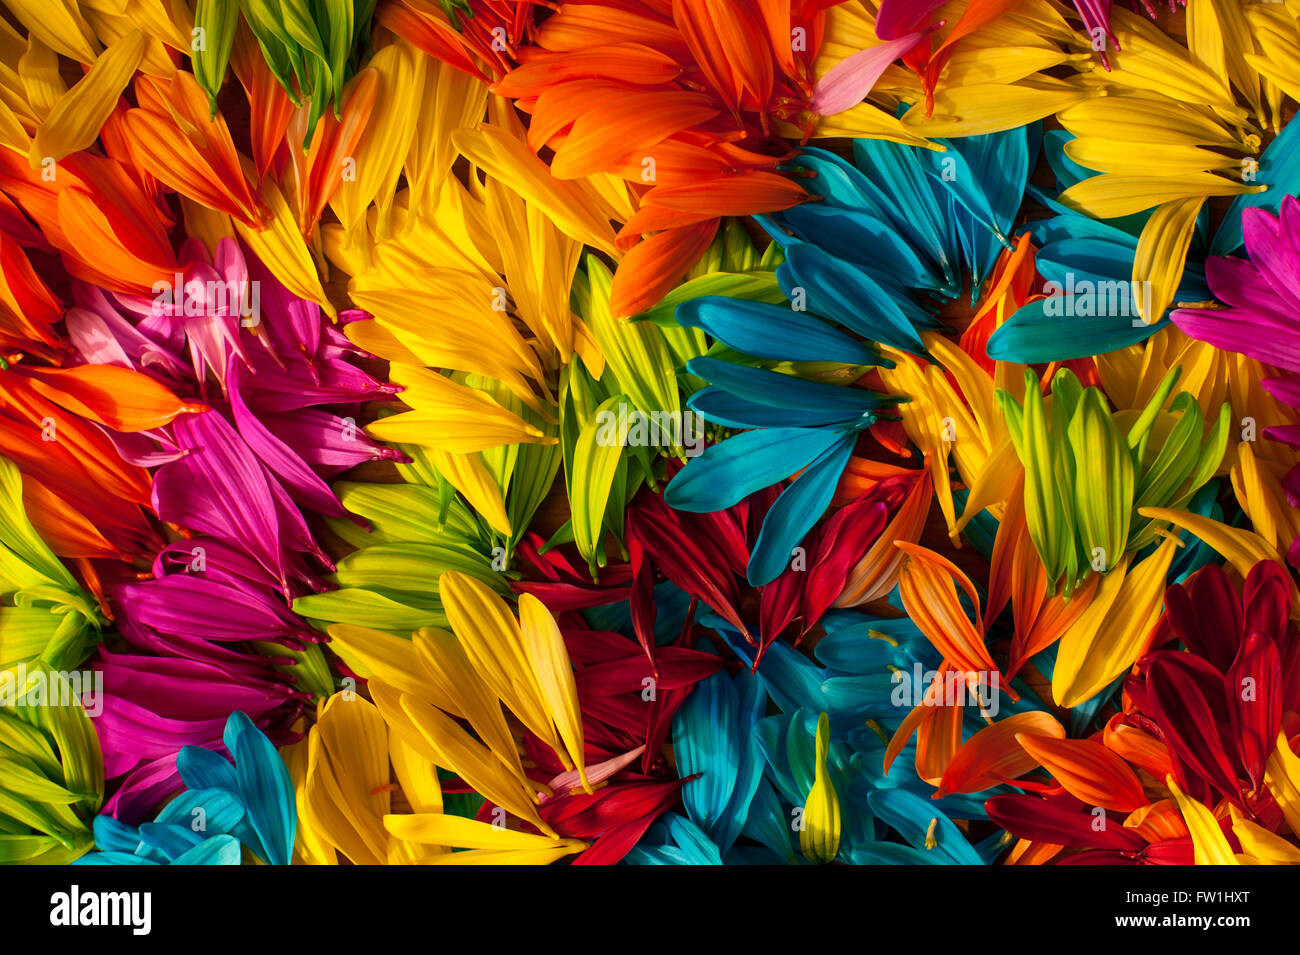 Multicolored daisy petals close-up Stock Photo